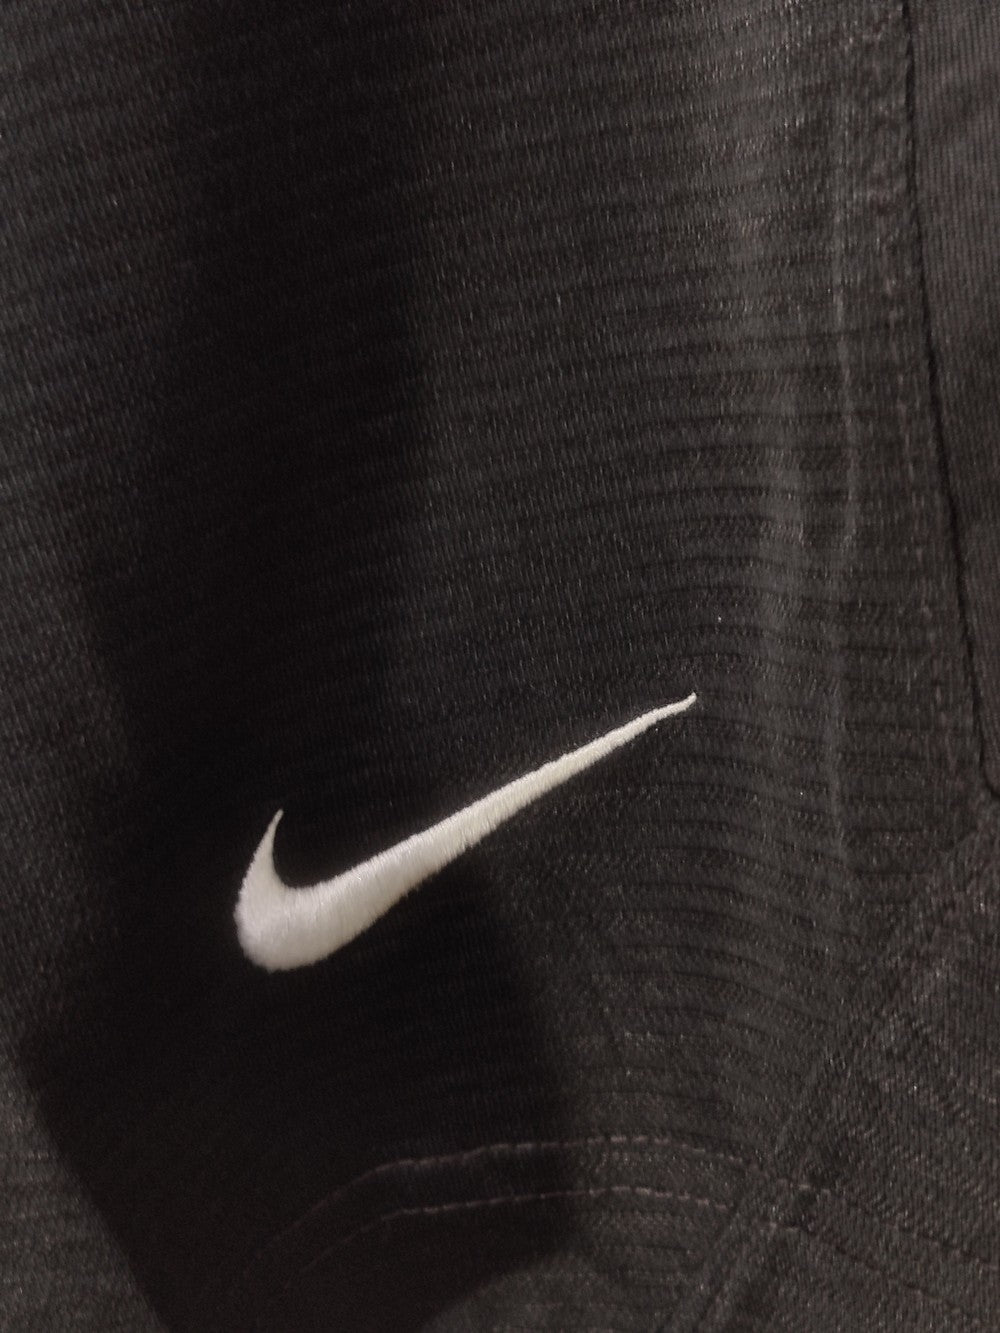 Nike Branded Original Sports Short For Men